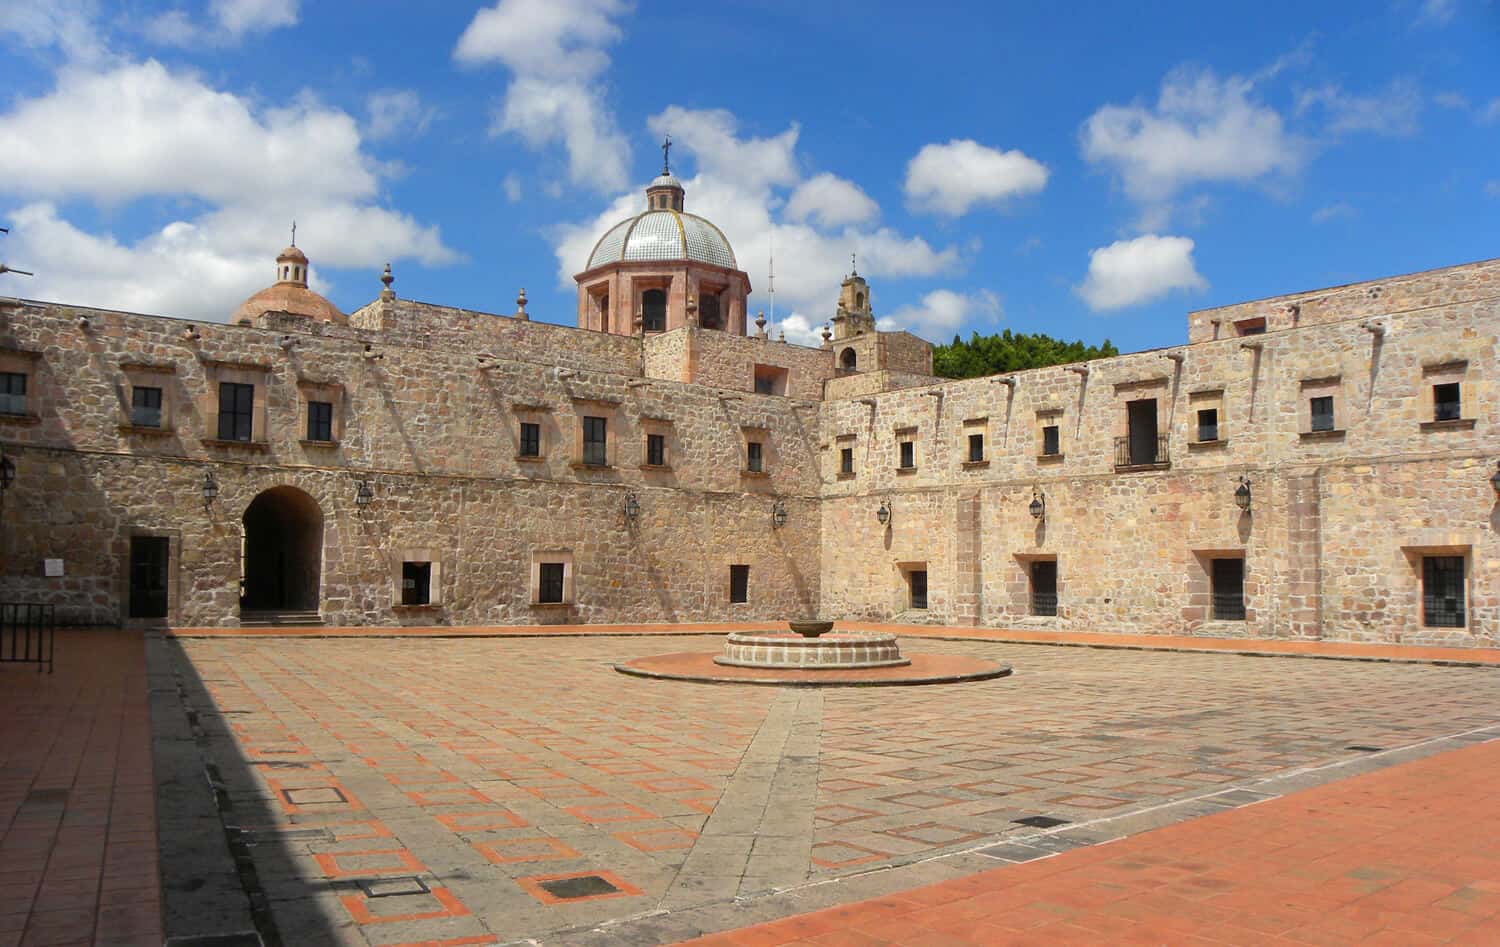 Casa de la Cultura, Morelia, Mexico. Morelia (Michoacán) and why even UNESCO listed world heritage sites can leave you feeling blah